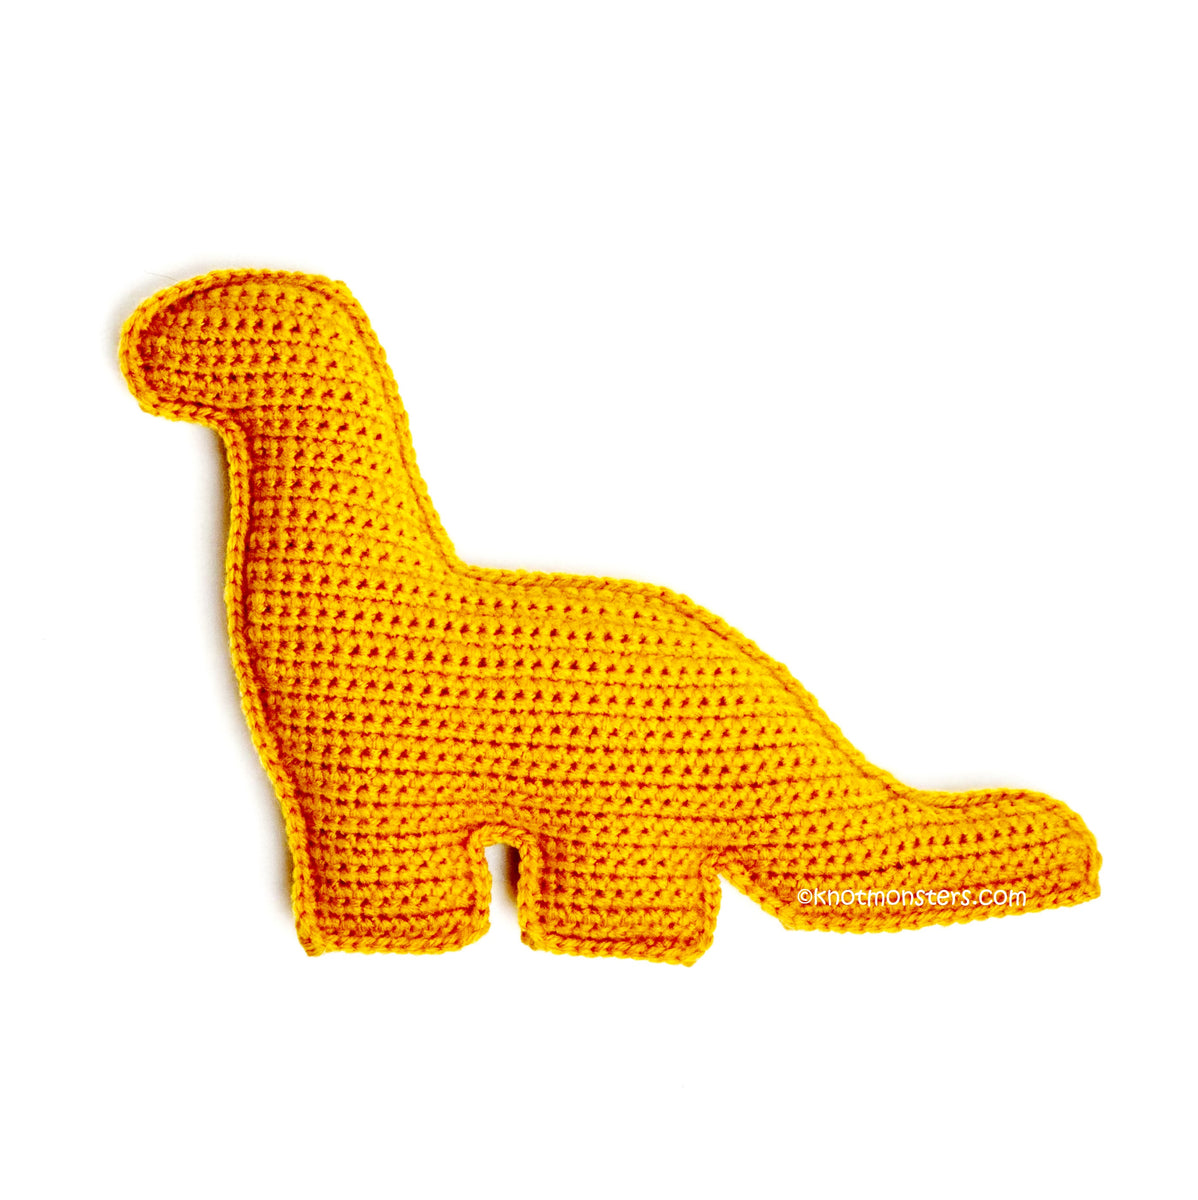 Dino Nuggets Egg Stamp - Crafty Chicken Co